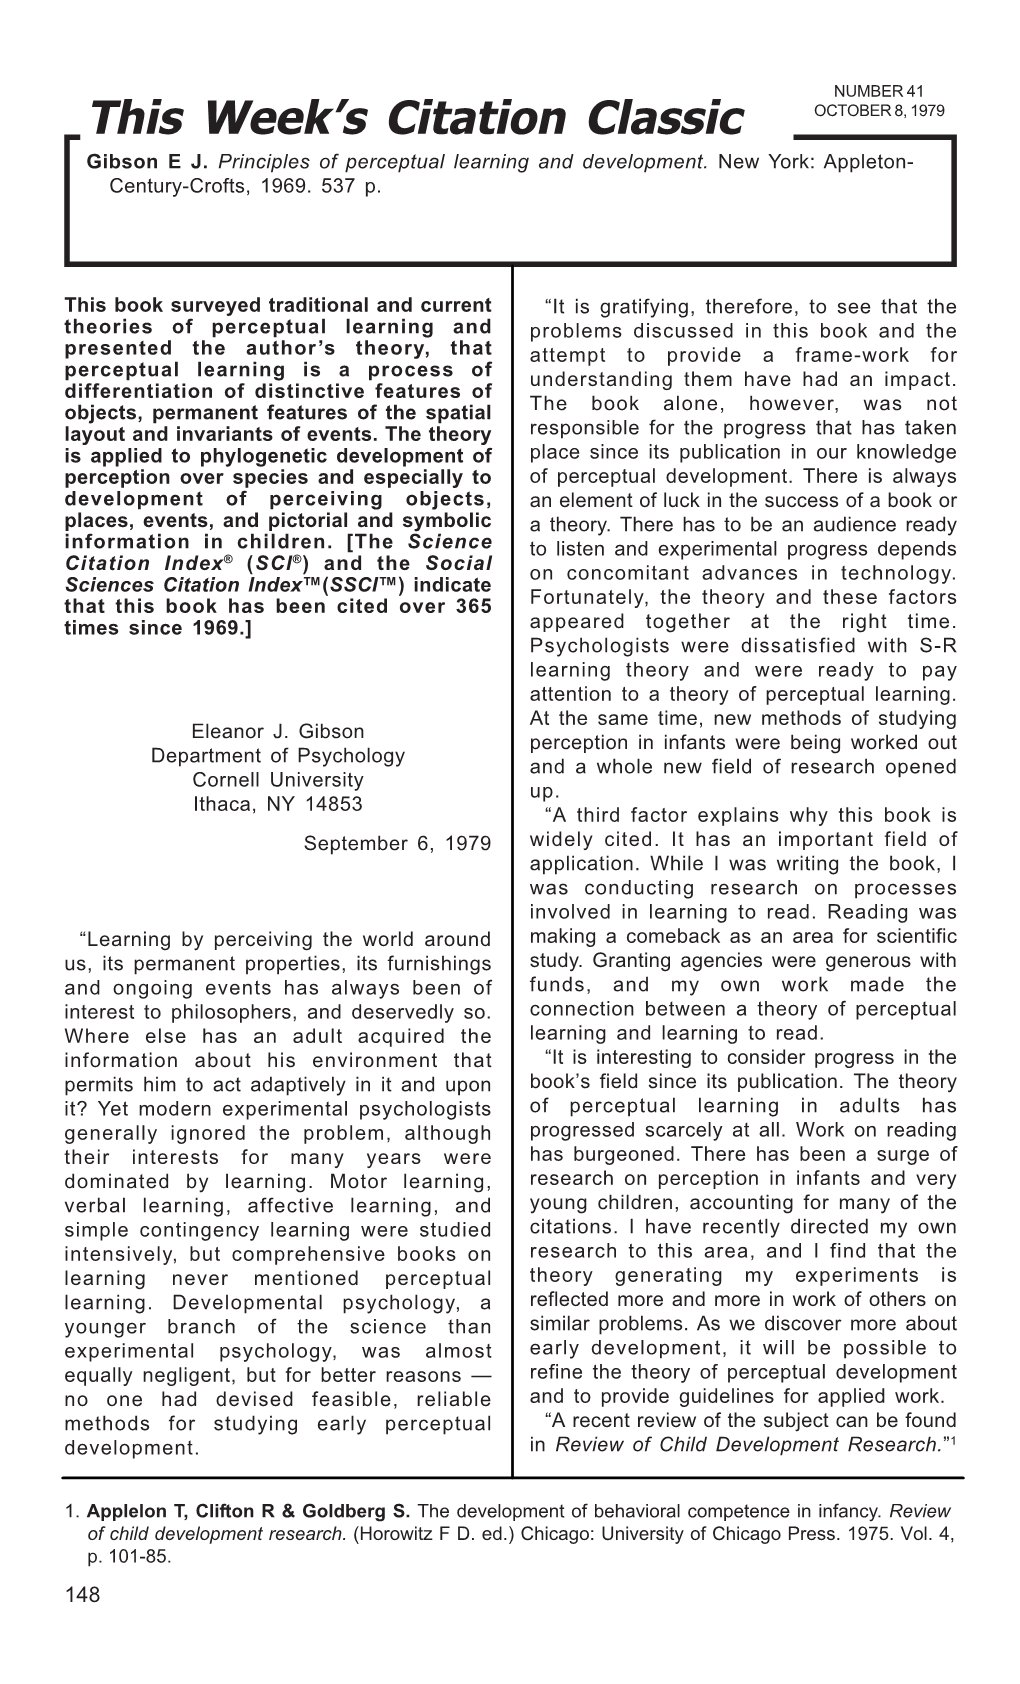 Gibson E J. Principles of Perceptual Learning and Development. New York: Appleton- Century-Crofts, 1969